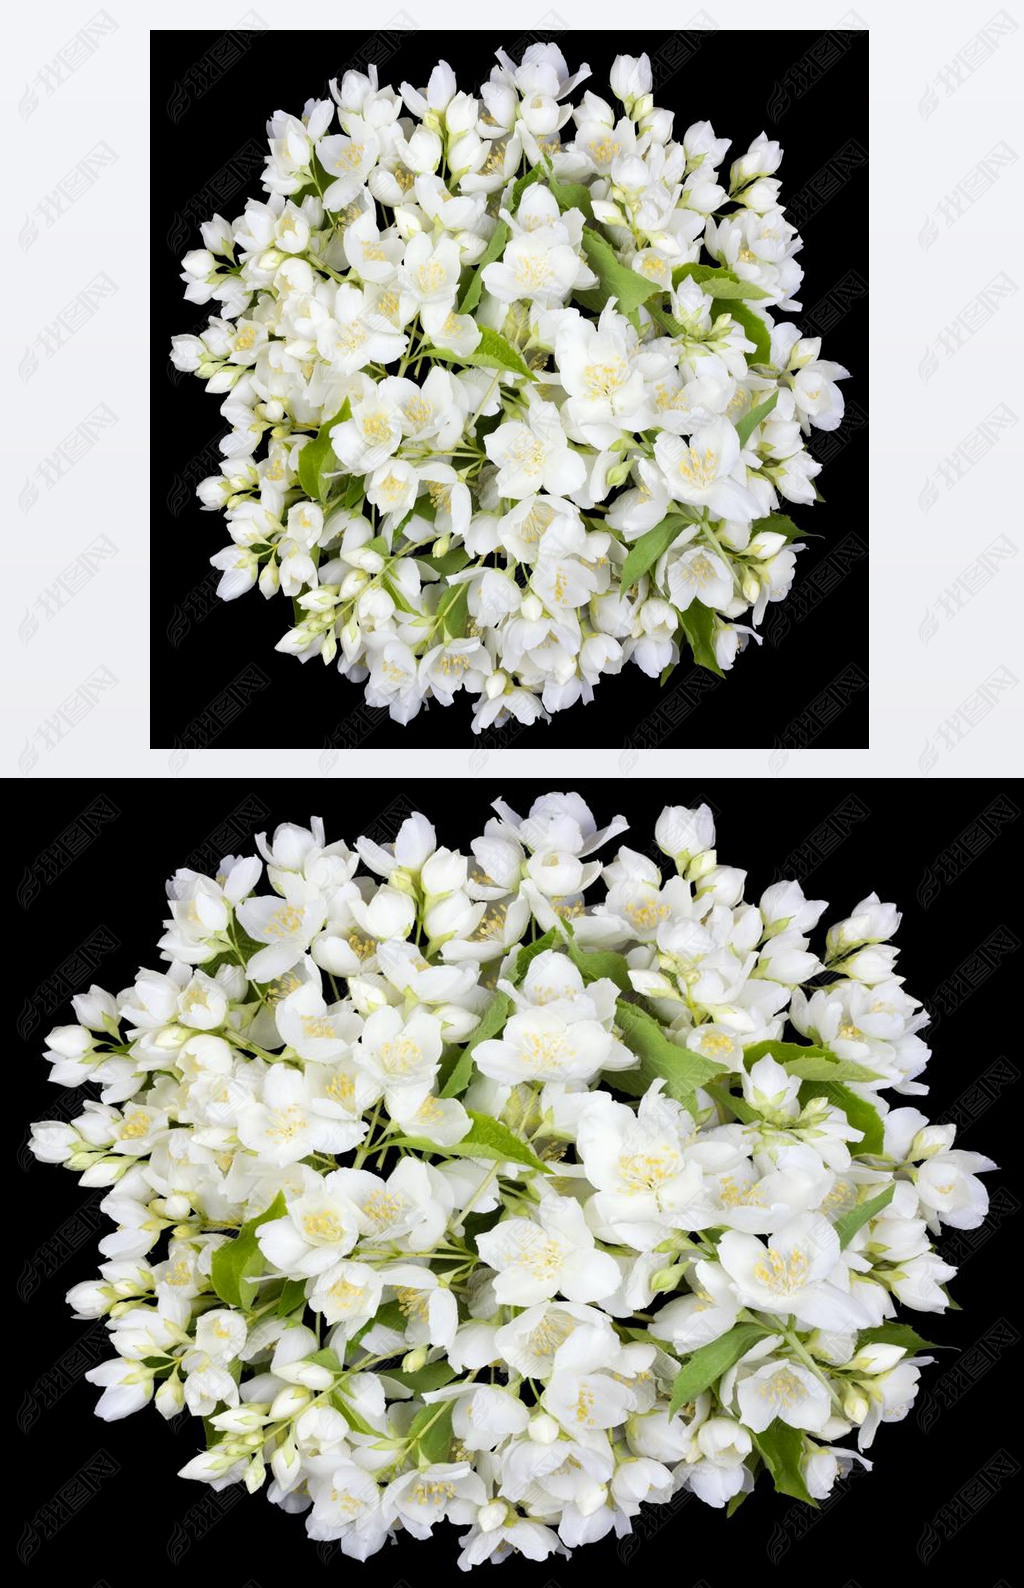 Circle from white jaine flowers